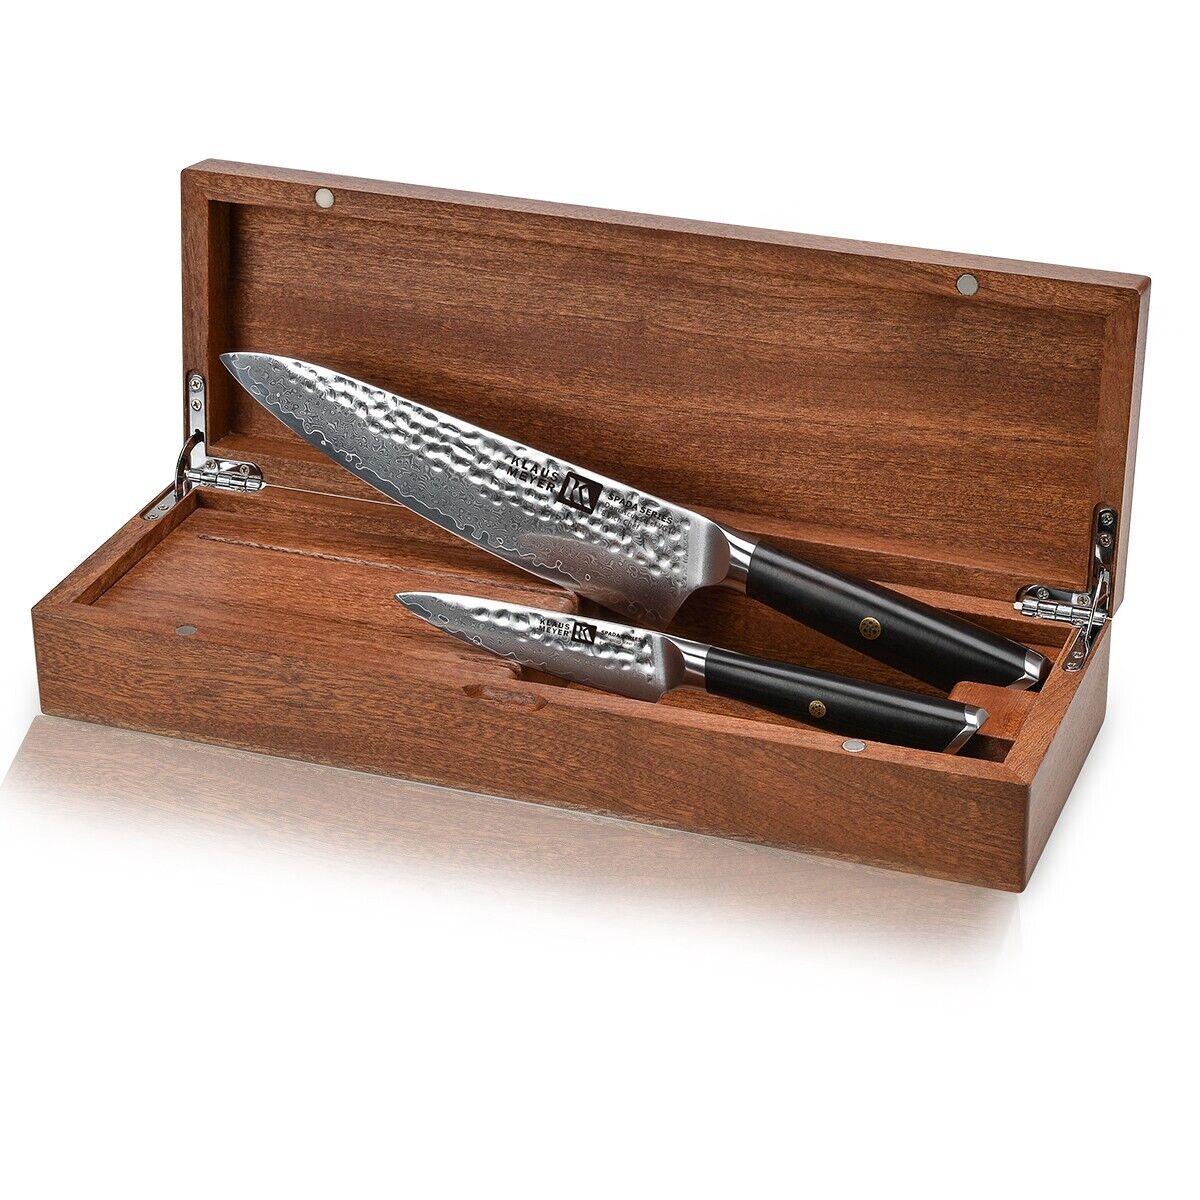 Klaus Meyer Spada Damascus Steel 2 Piece Knife Set with Sapele Wood Box